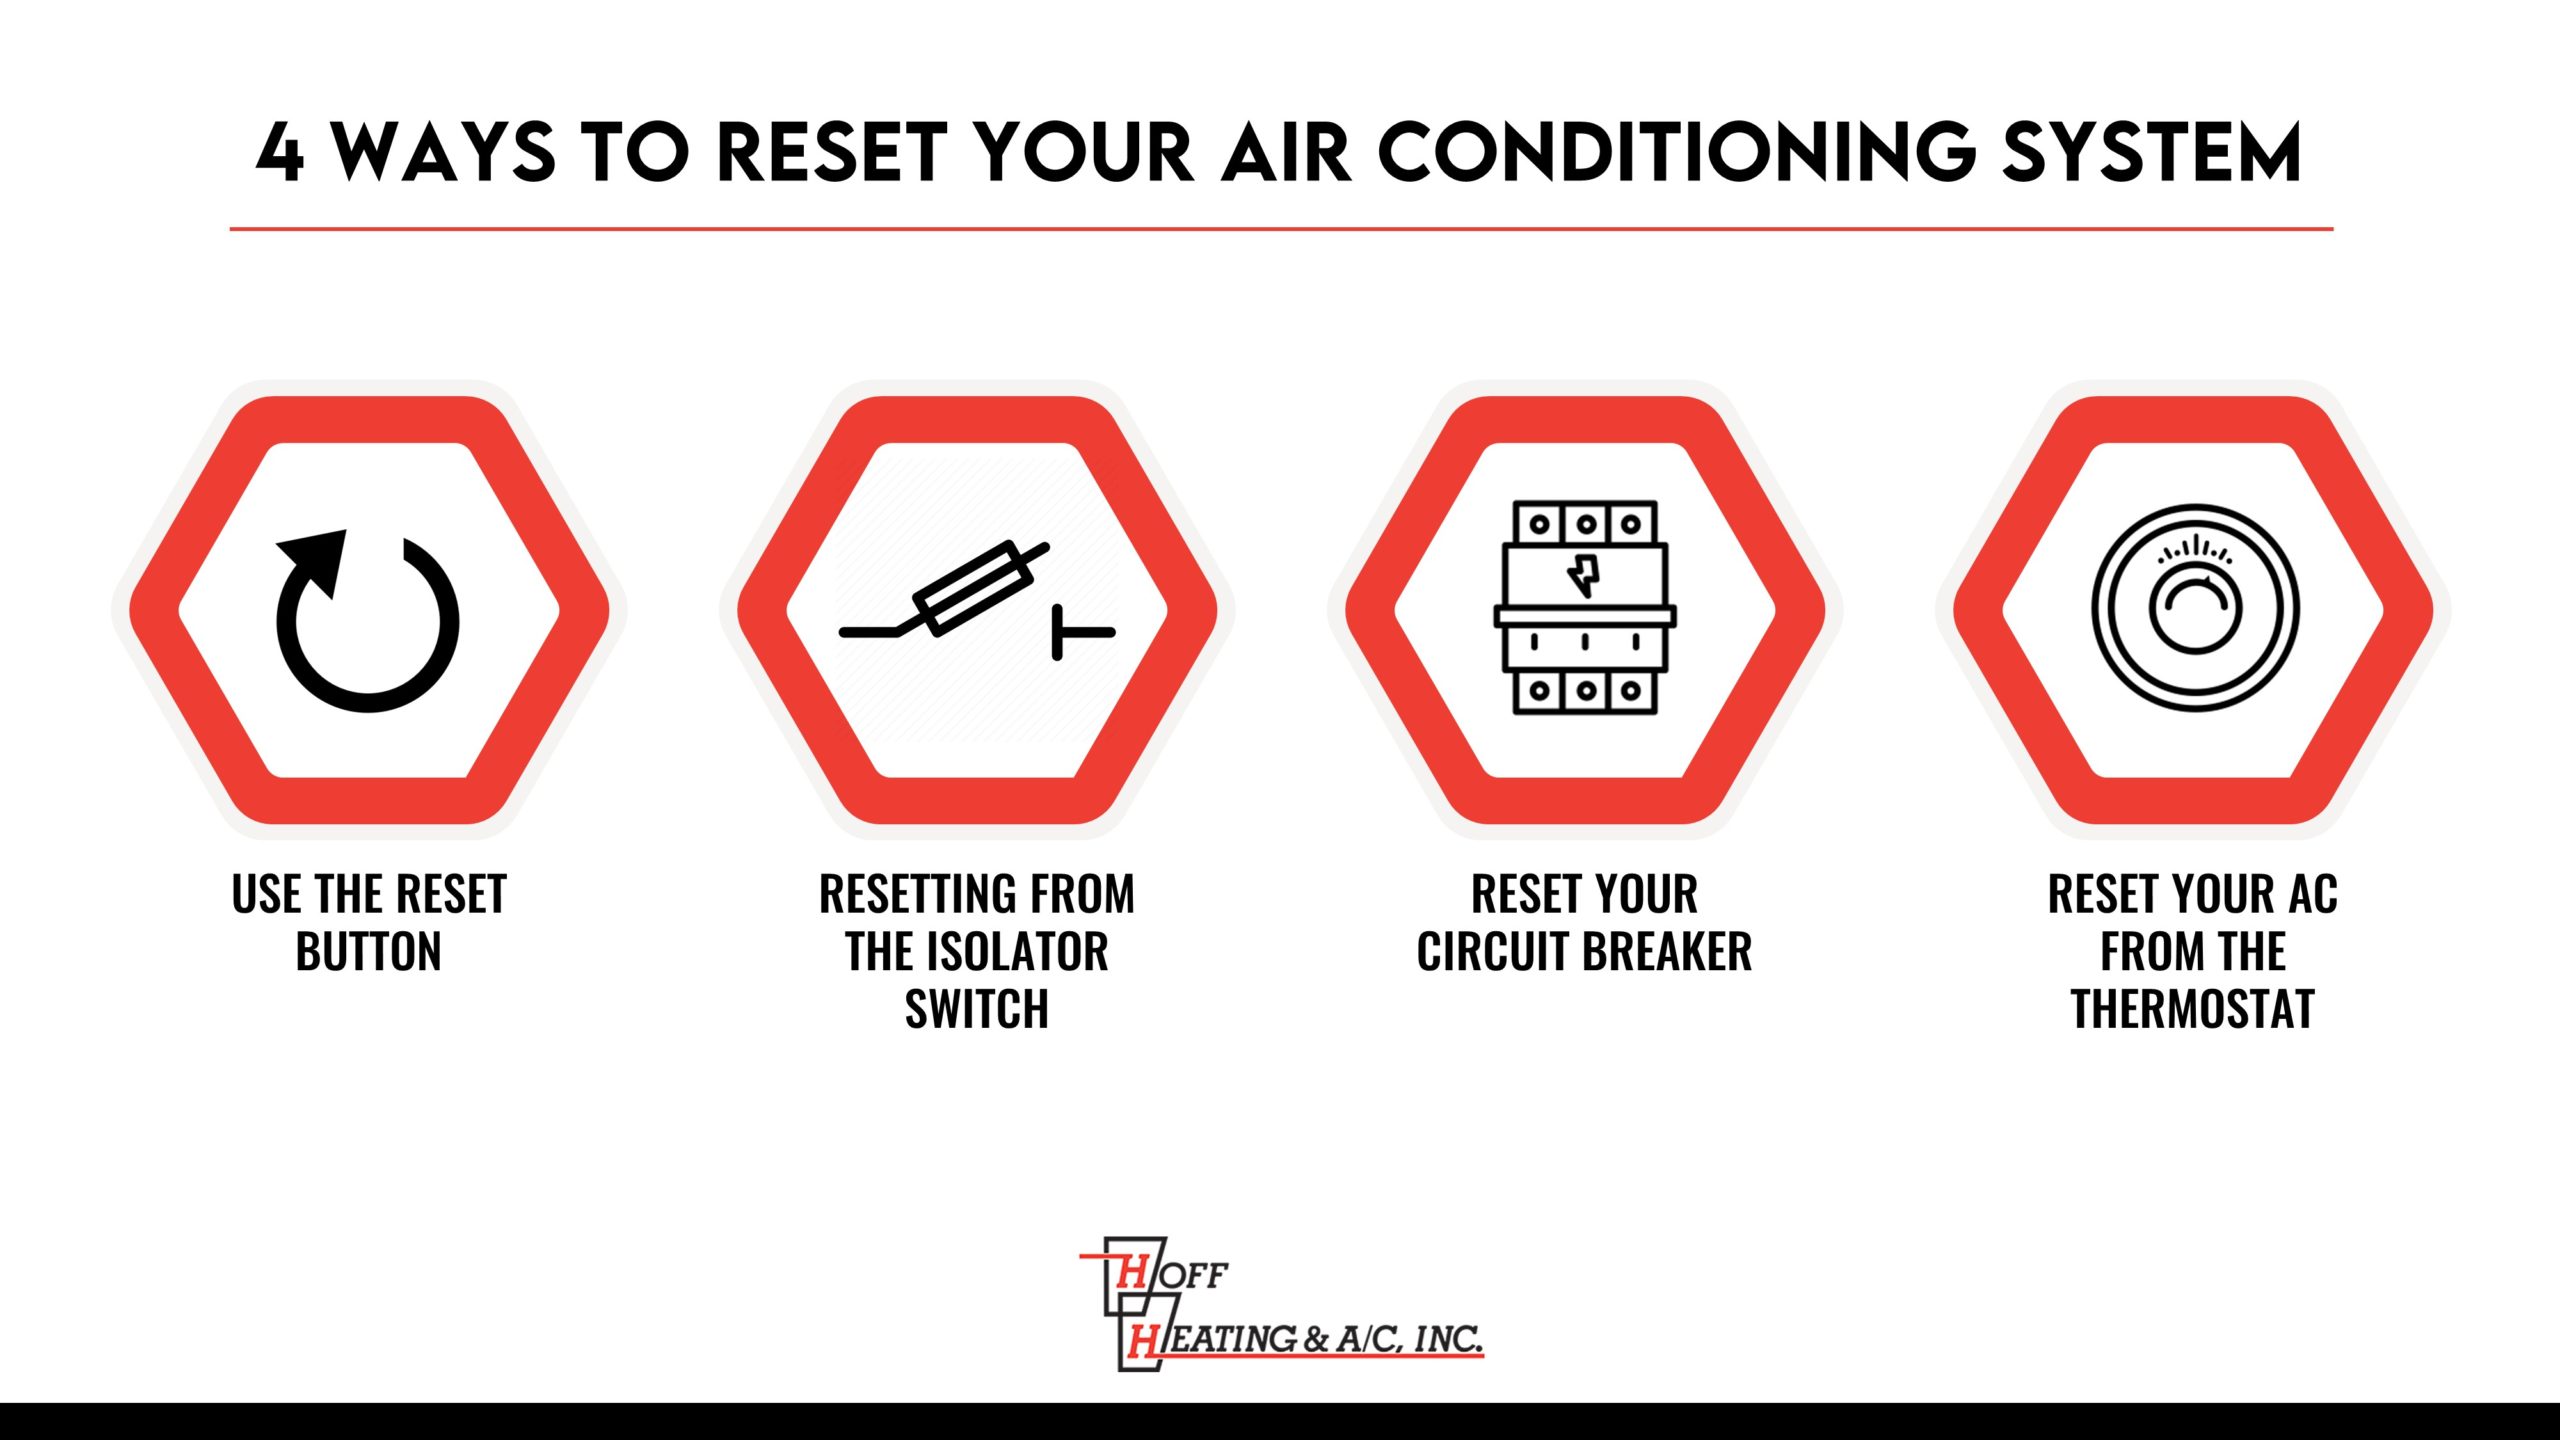 home air conditioner schematic